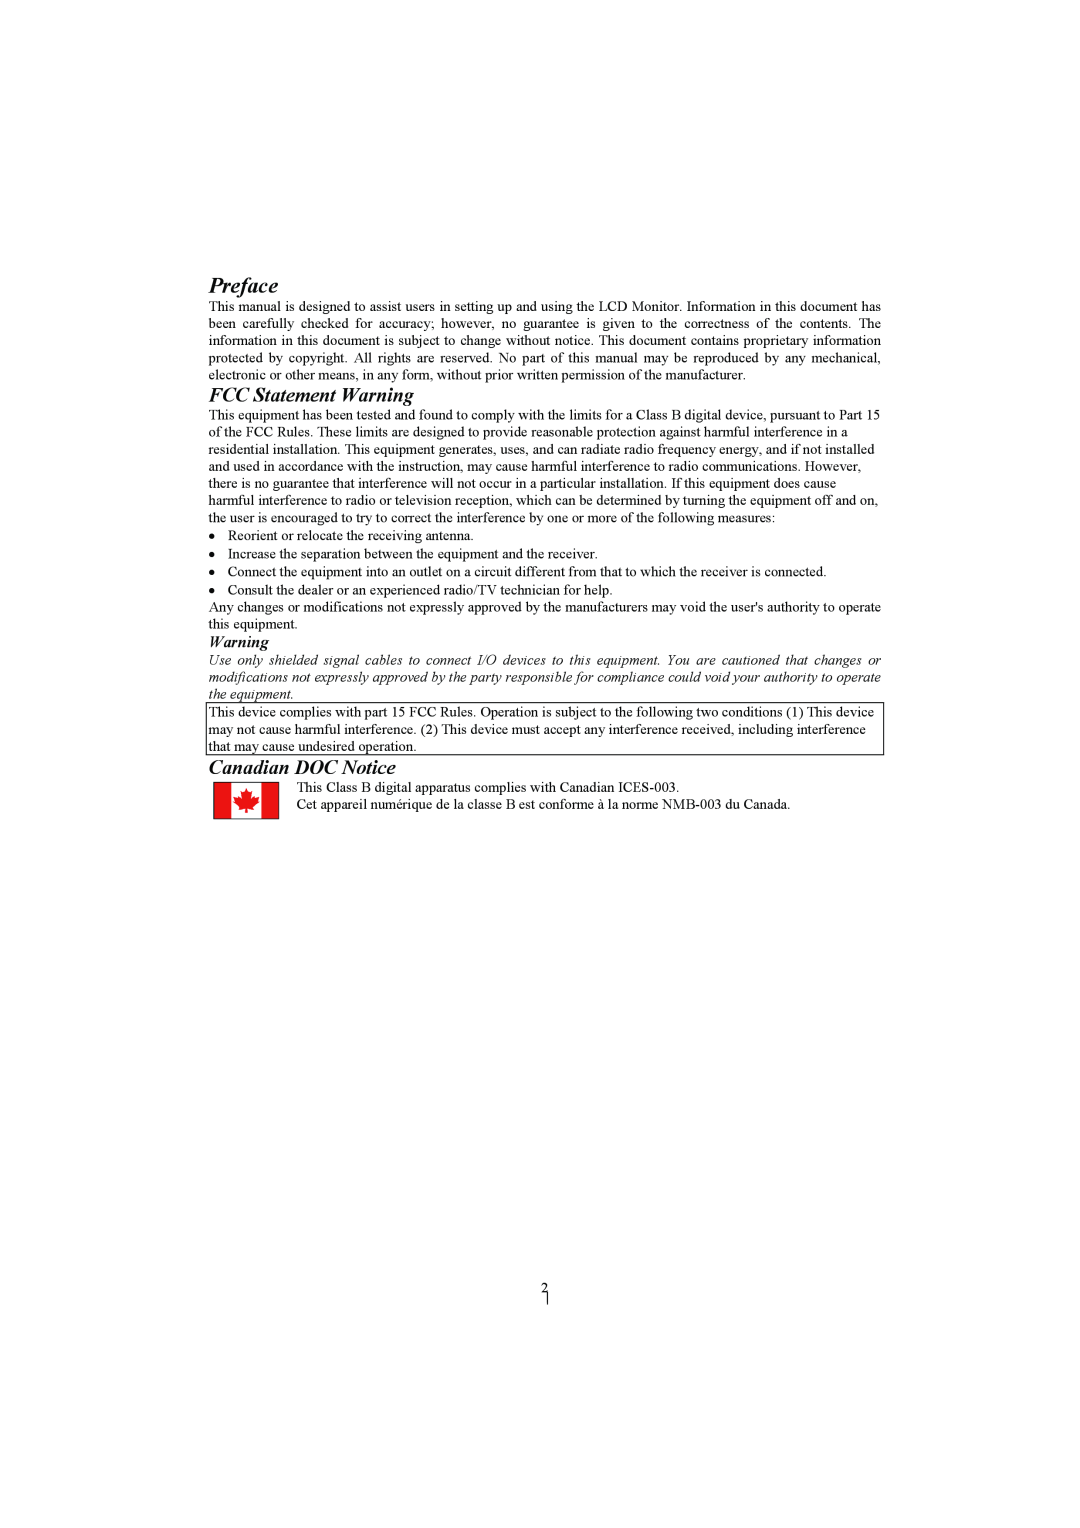 Planar PL1911M manual Preface, FCC Statement Warning, Canadian DOC Notice 